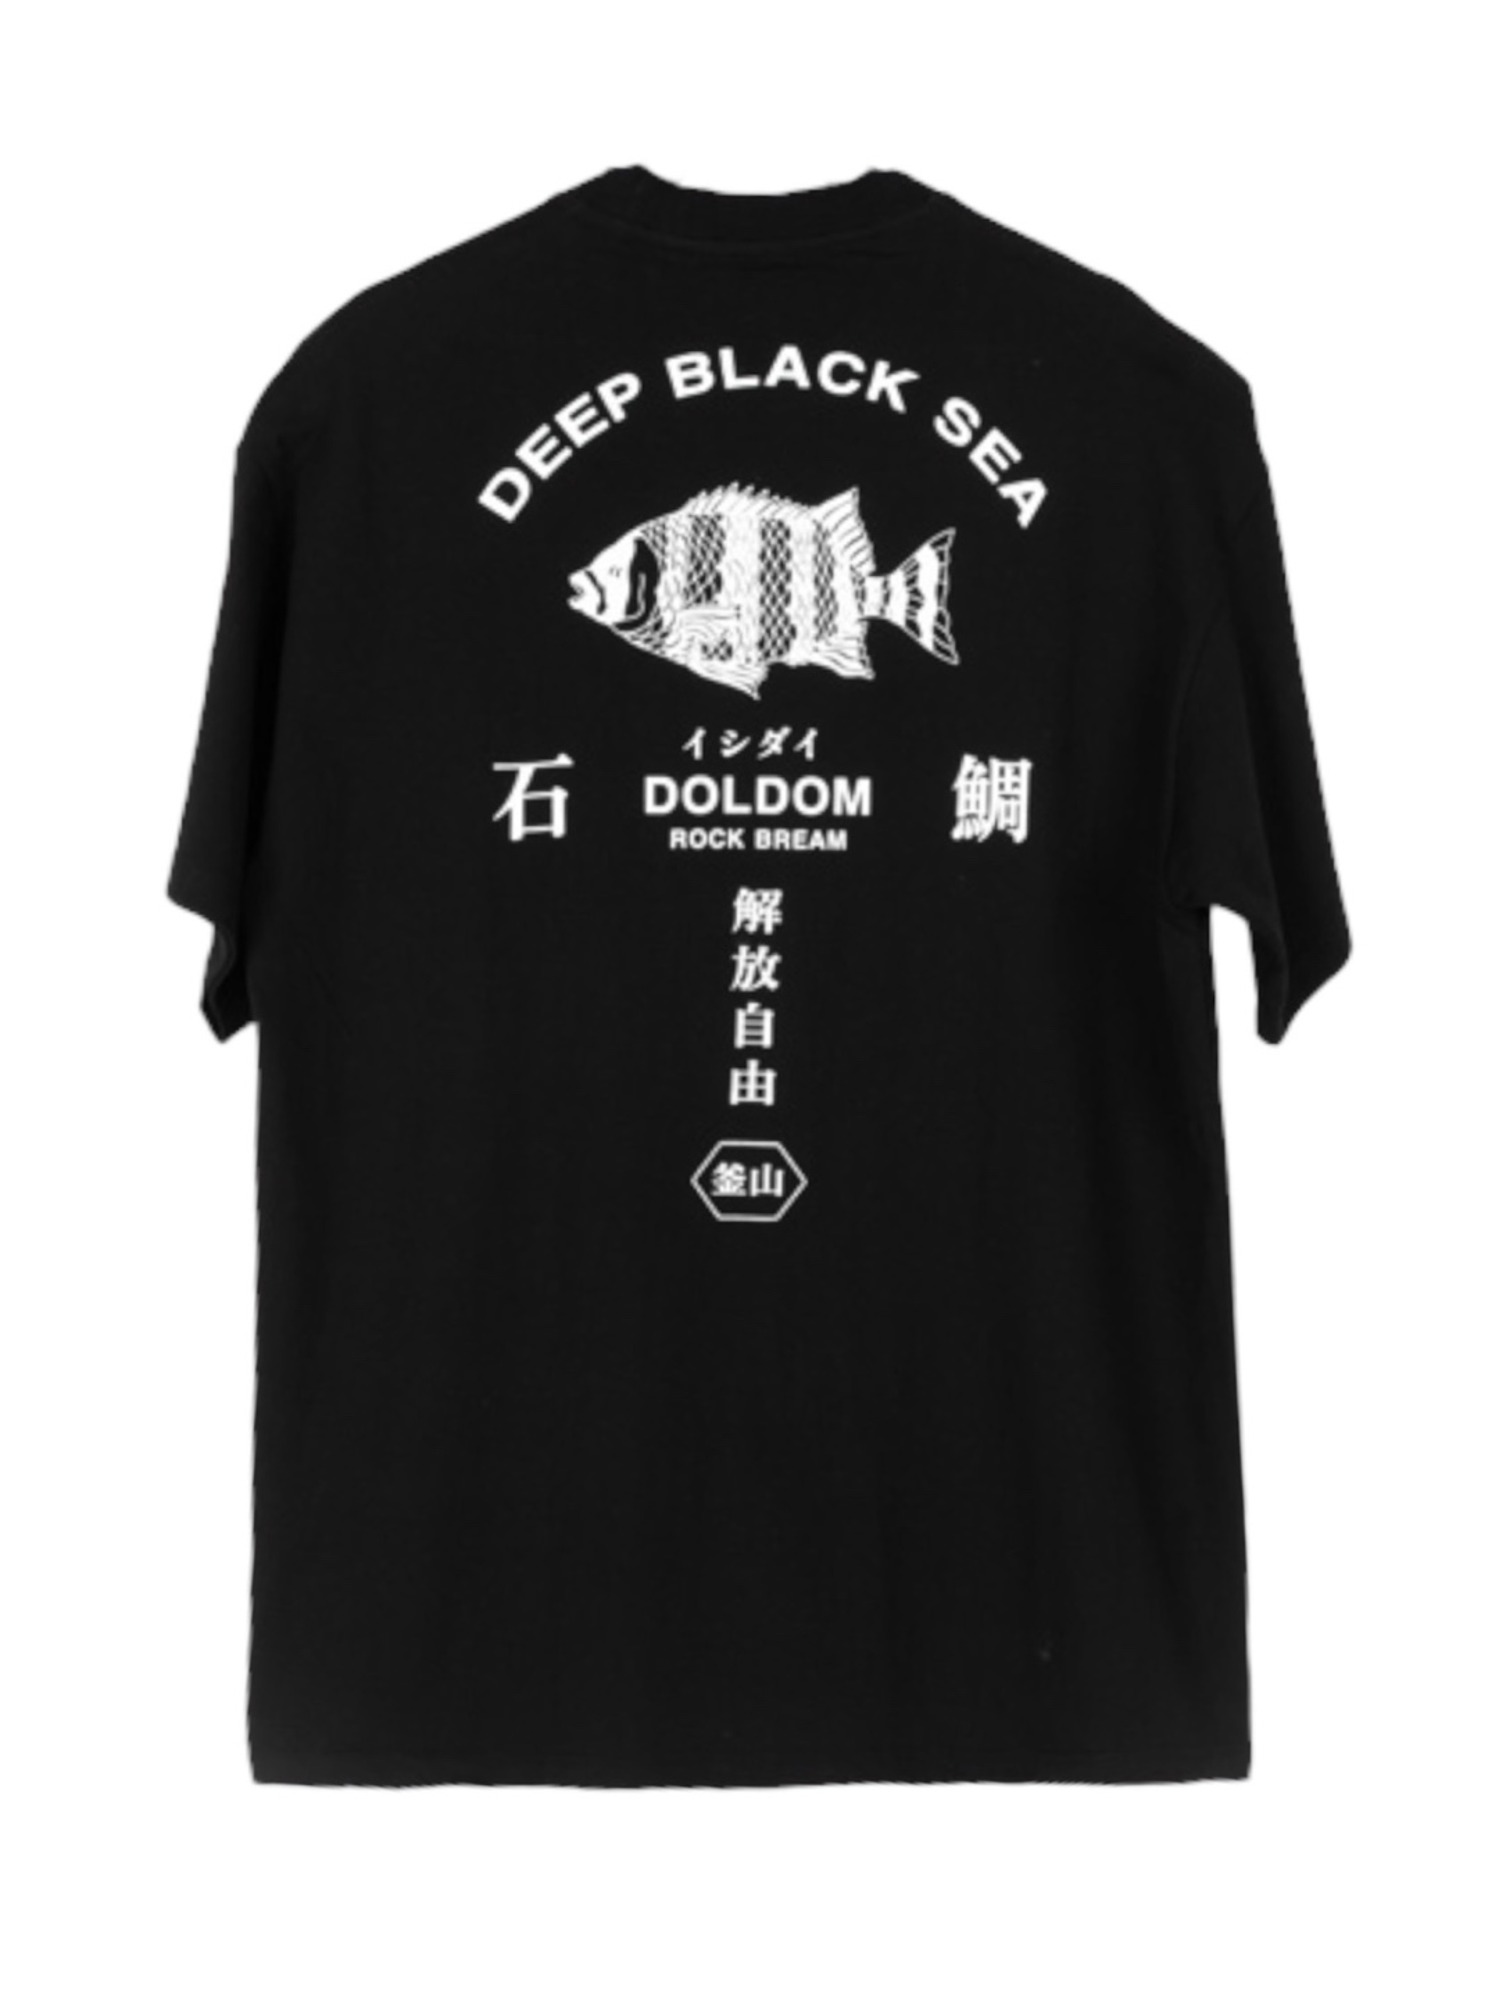 解放自由 釜山 Renewal 돌돔「石鯛」1/2 T-Shirts Black  [Size1, 2 재입고]